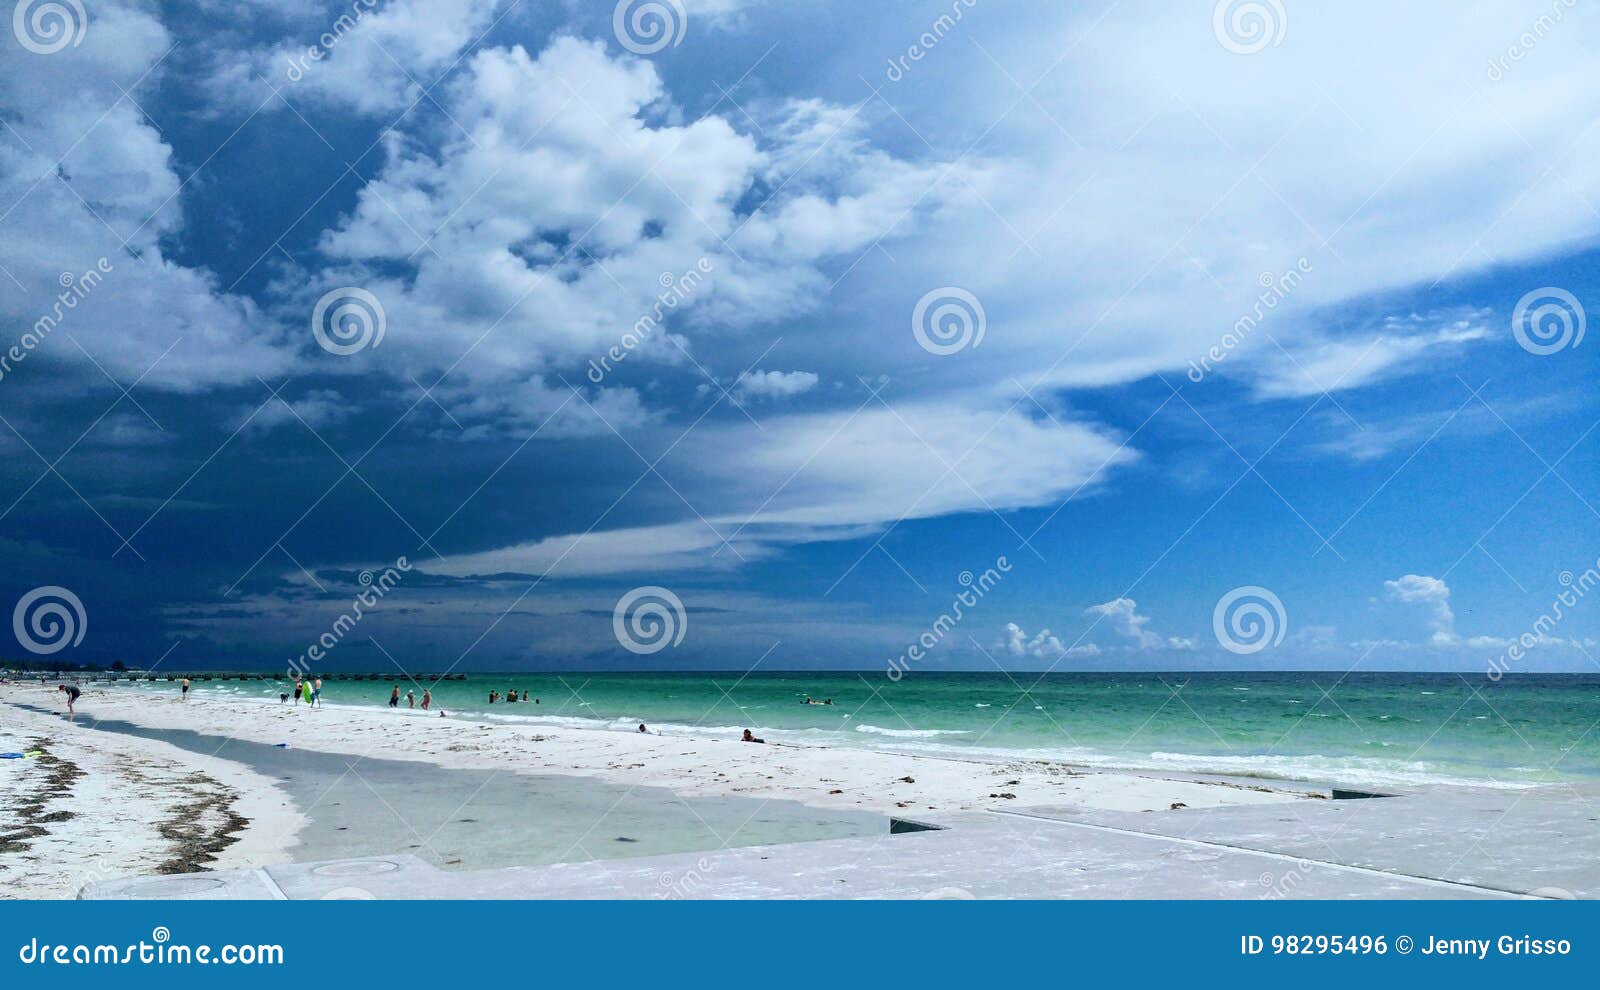 Top Beaches in Southwest Florida